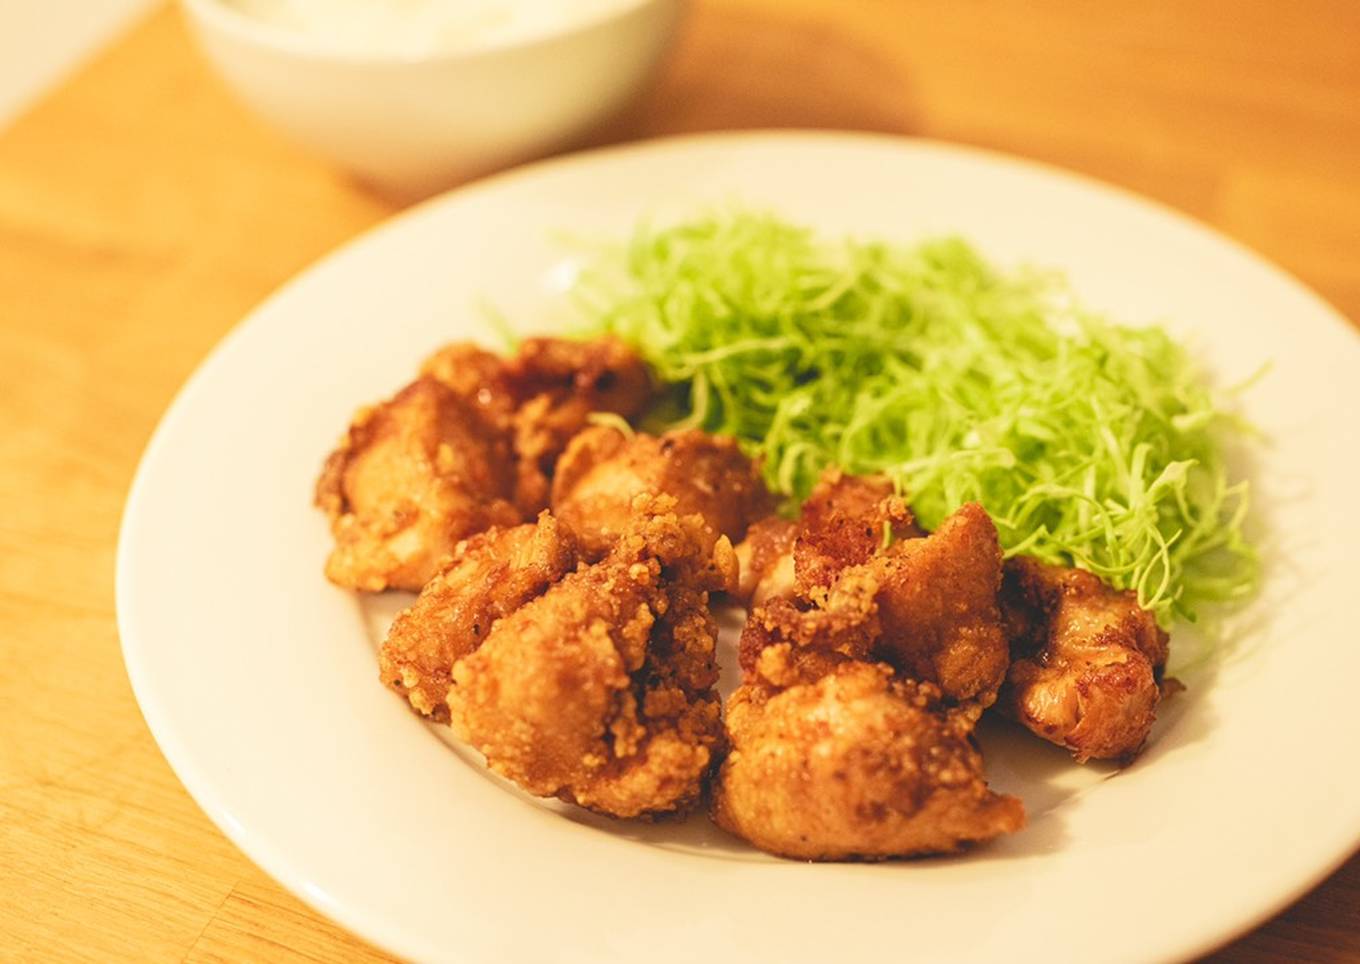 Kara-age: Japanese style fried chicken